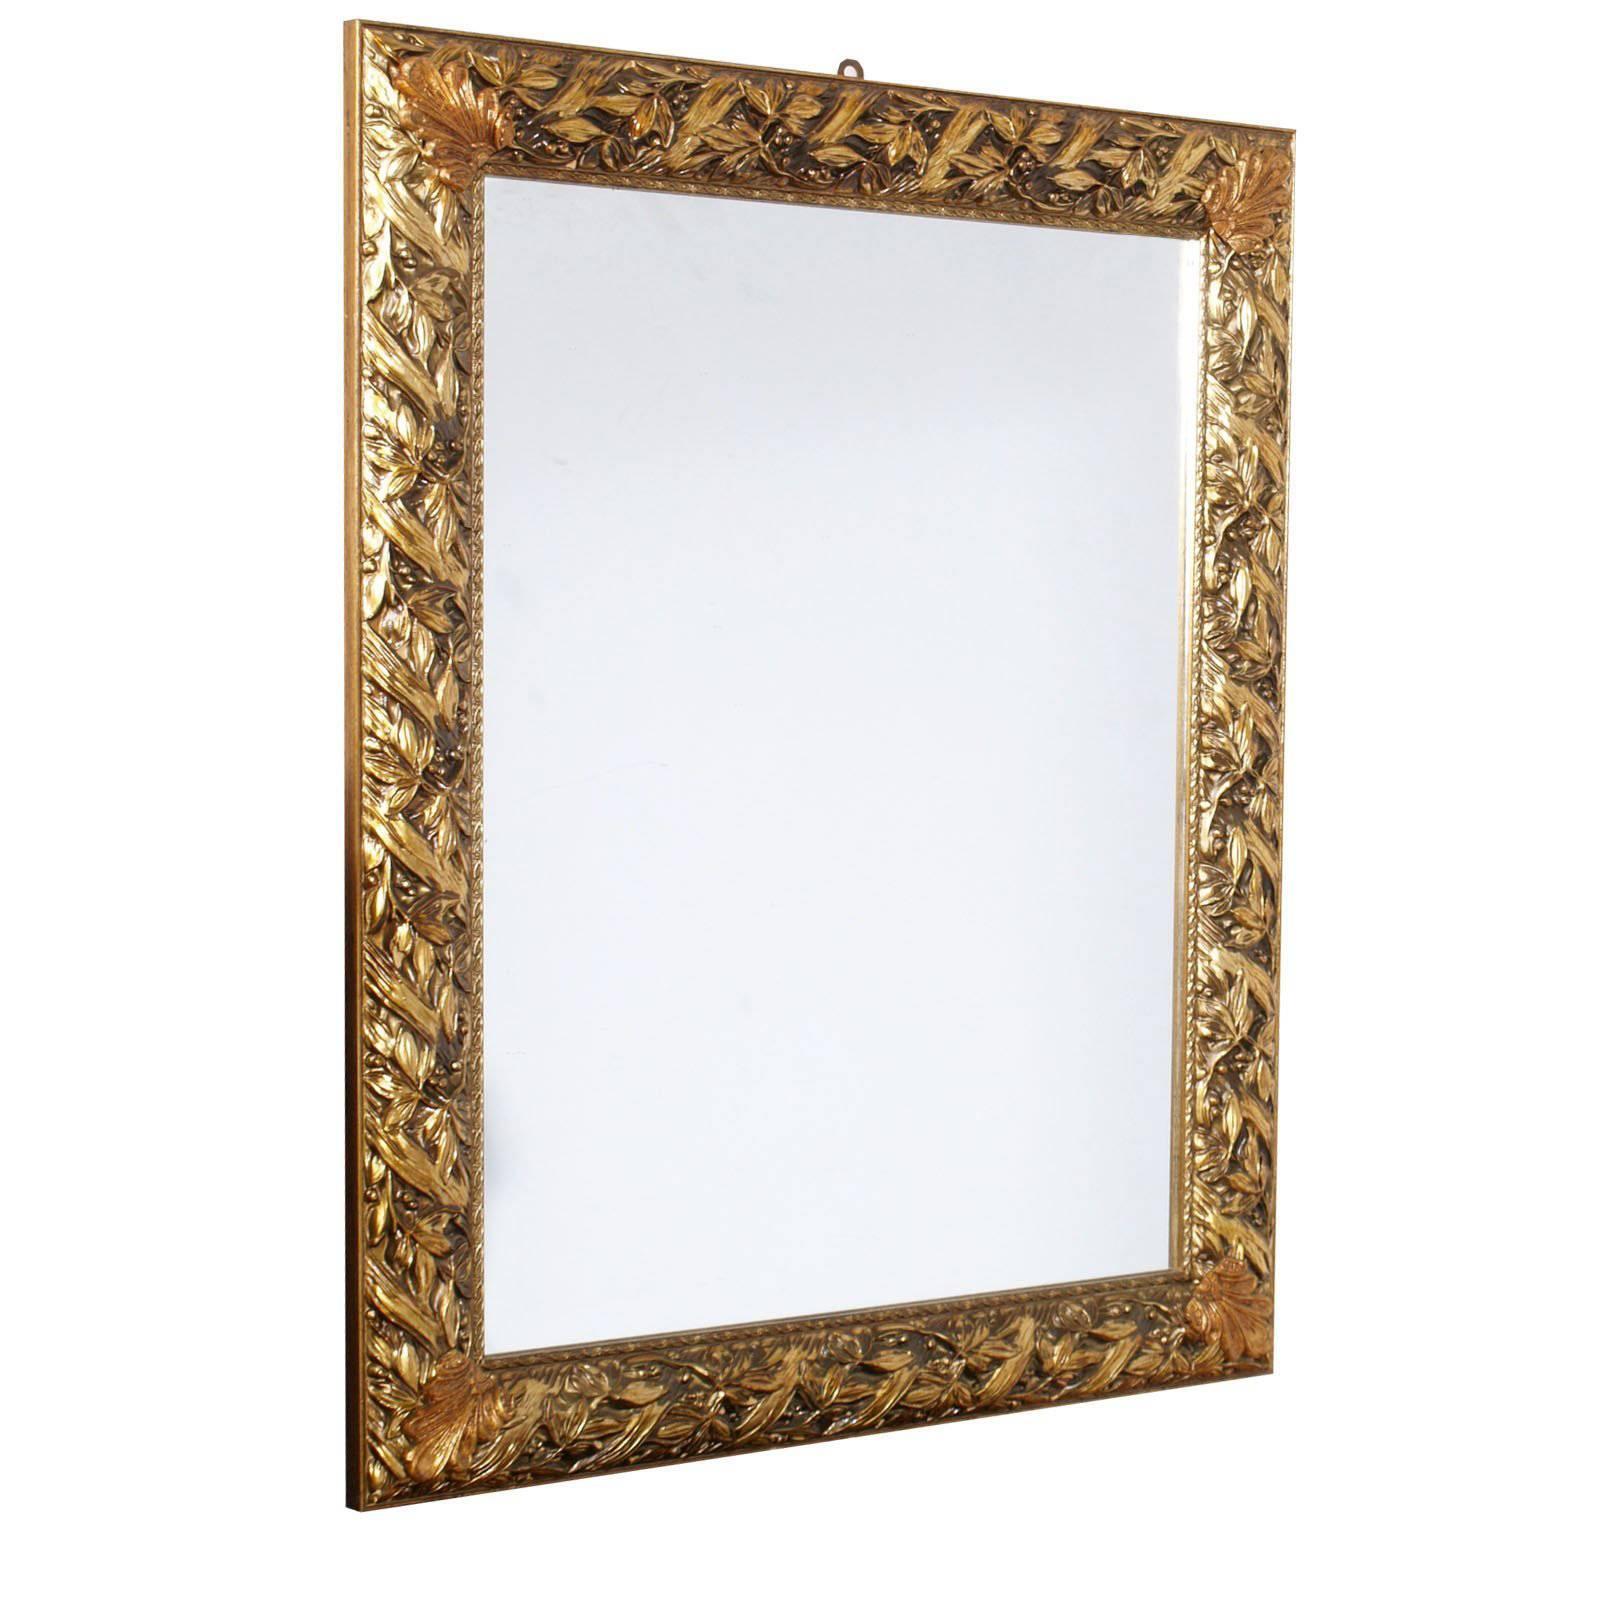 Art Nouveau Mirror with Carved Golden Frame, Florentine Crafts, 1930s-1940s